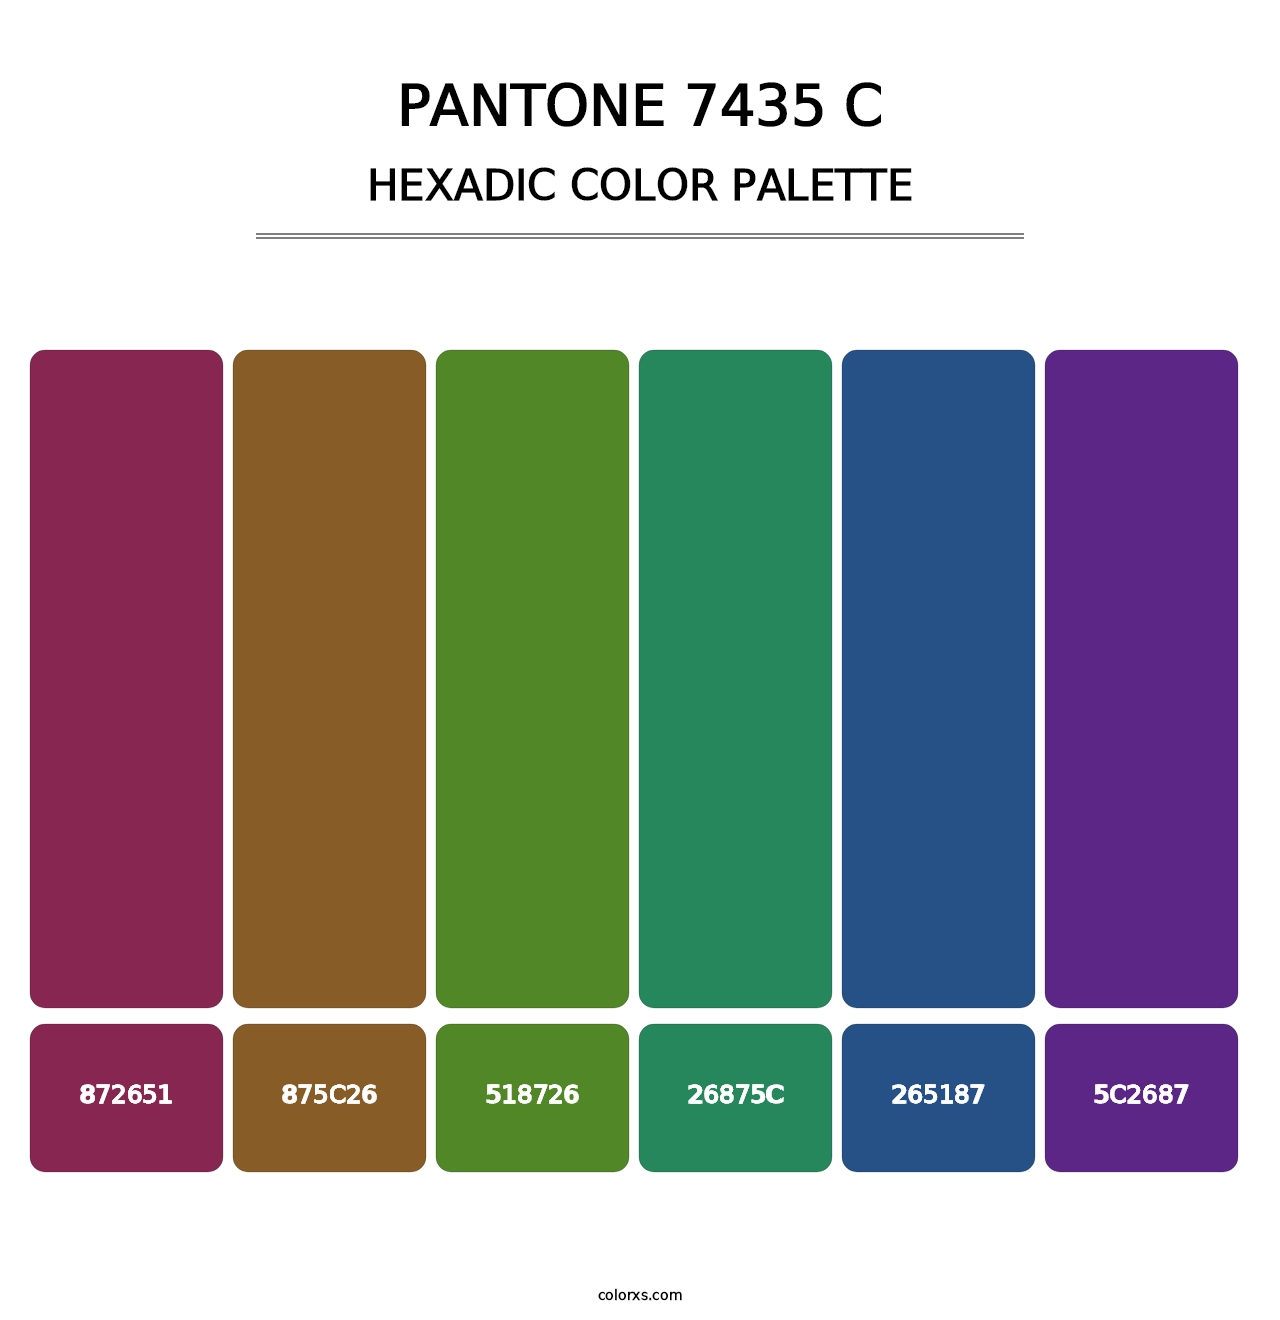 PANTONE 7435 C - Hexadic Color Palette